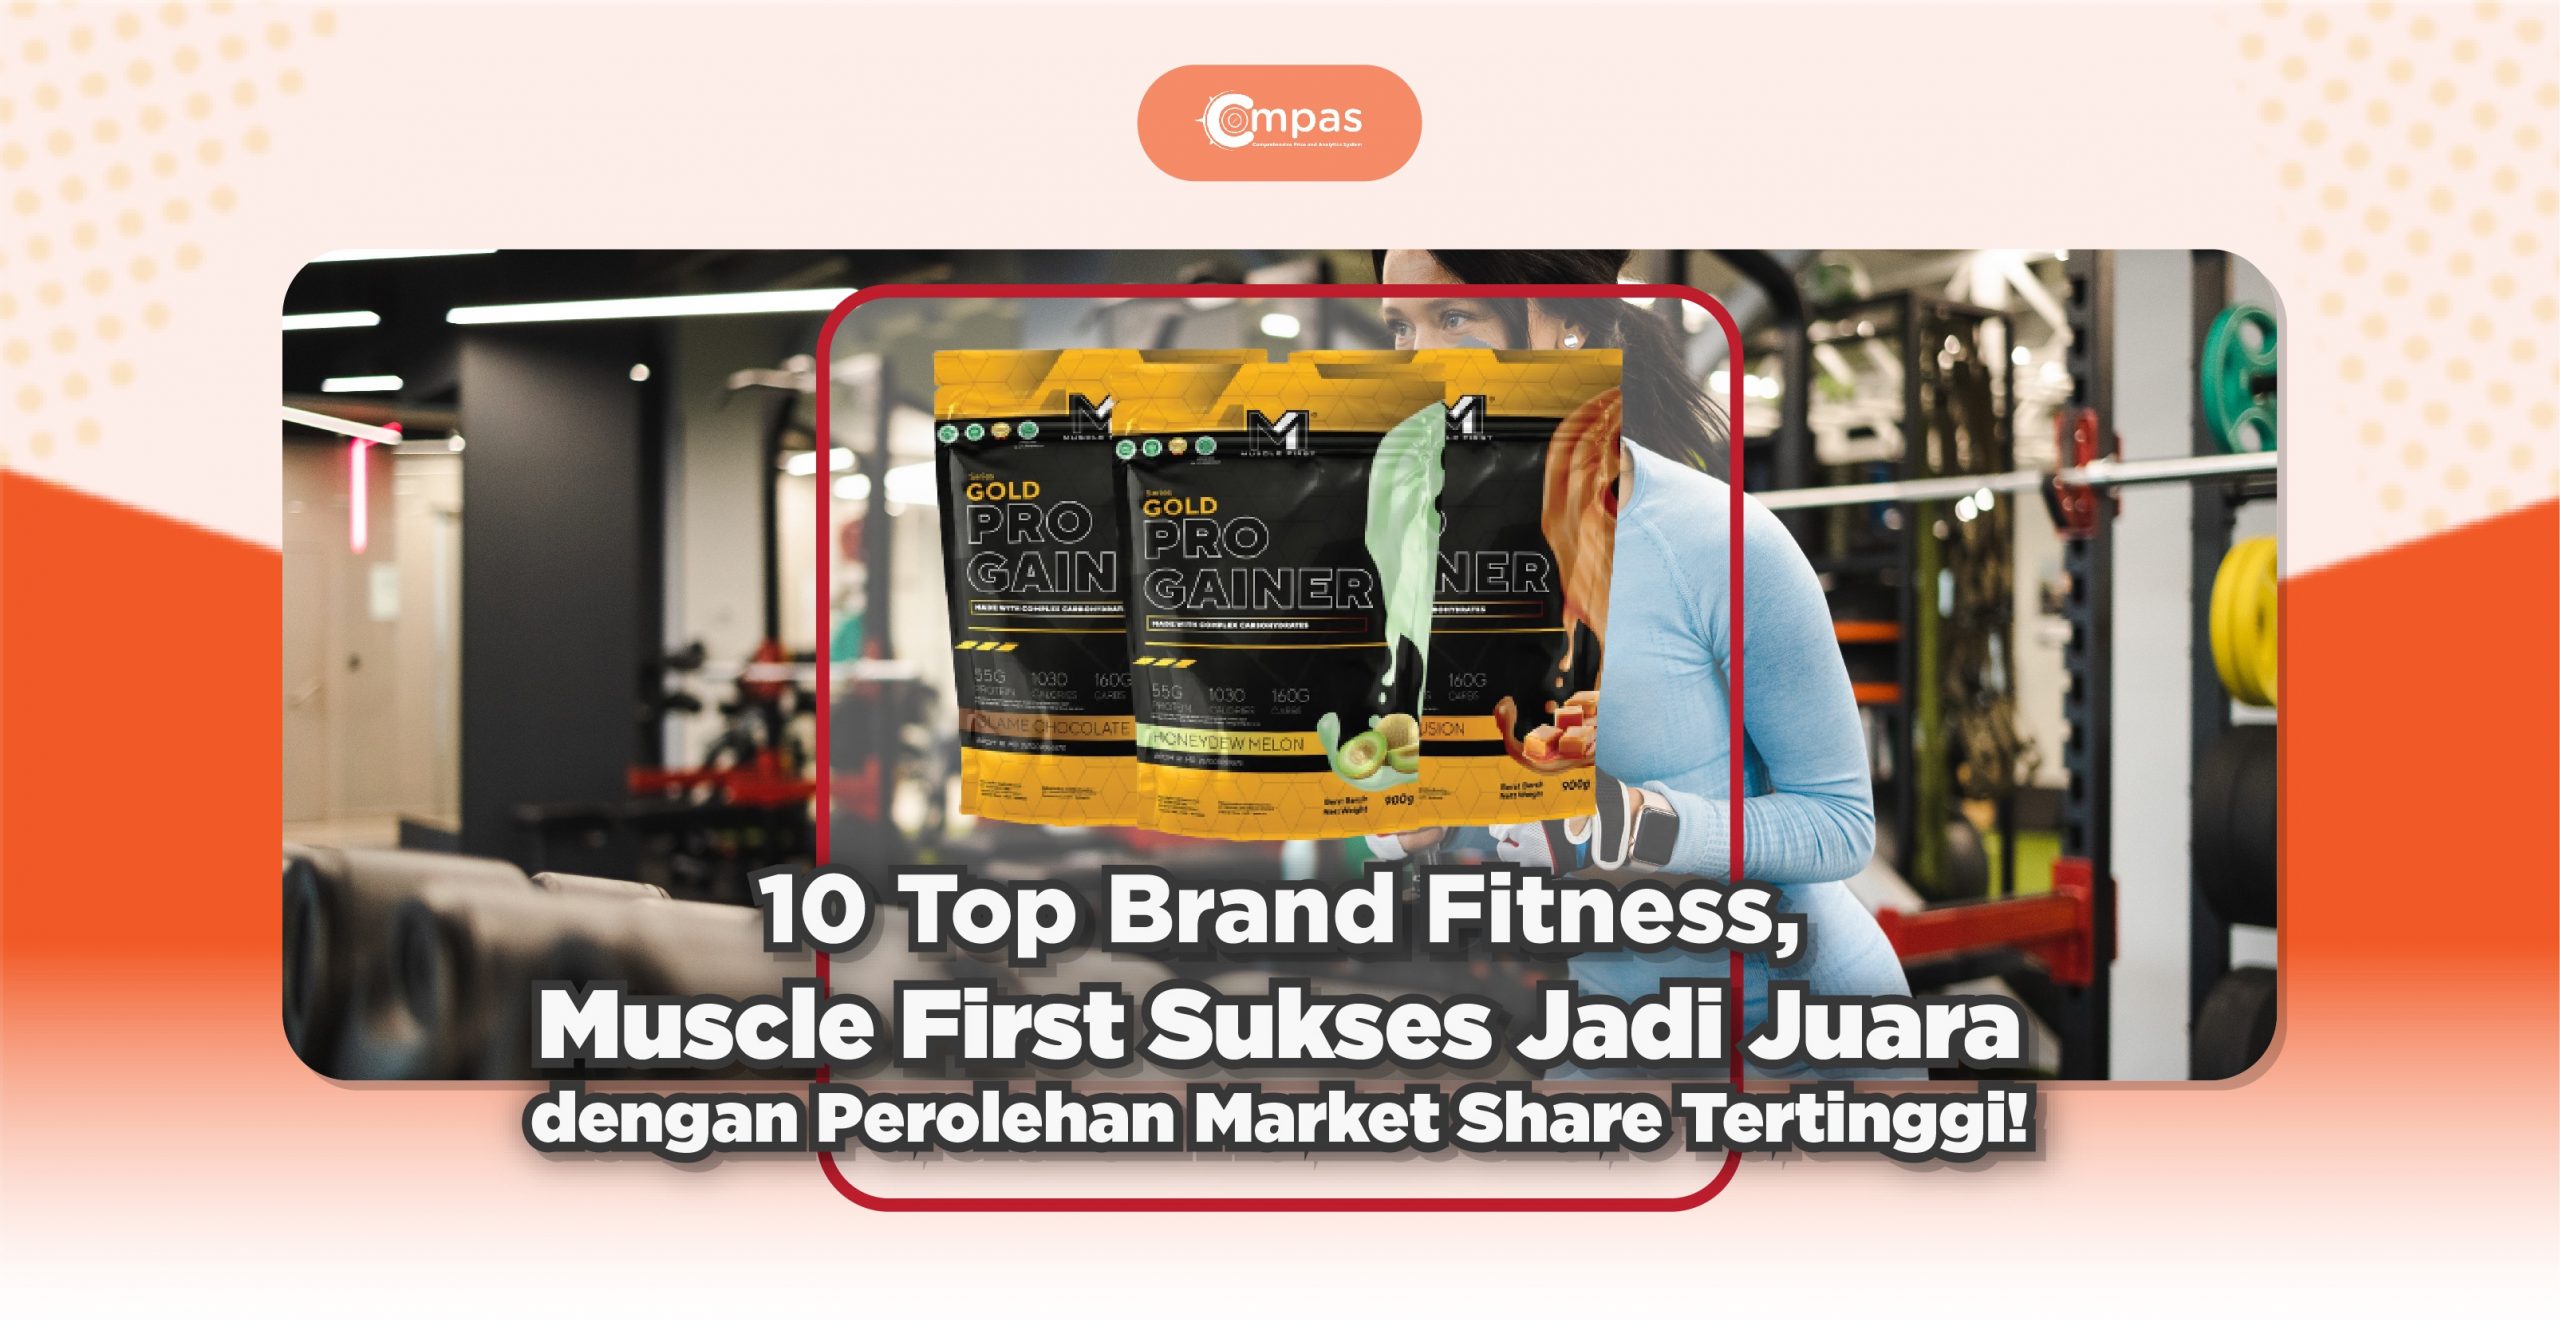 10 Top Brand Suplemen Fitness, Muscle First Berhasil Jadi Primadona dengan Perolehan Market Share Teratas di Shopee! D38C3486 7BA4 451D A5C5 247752155C4E scaled